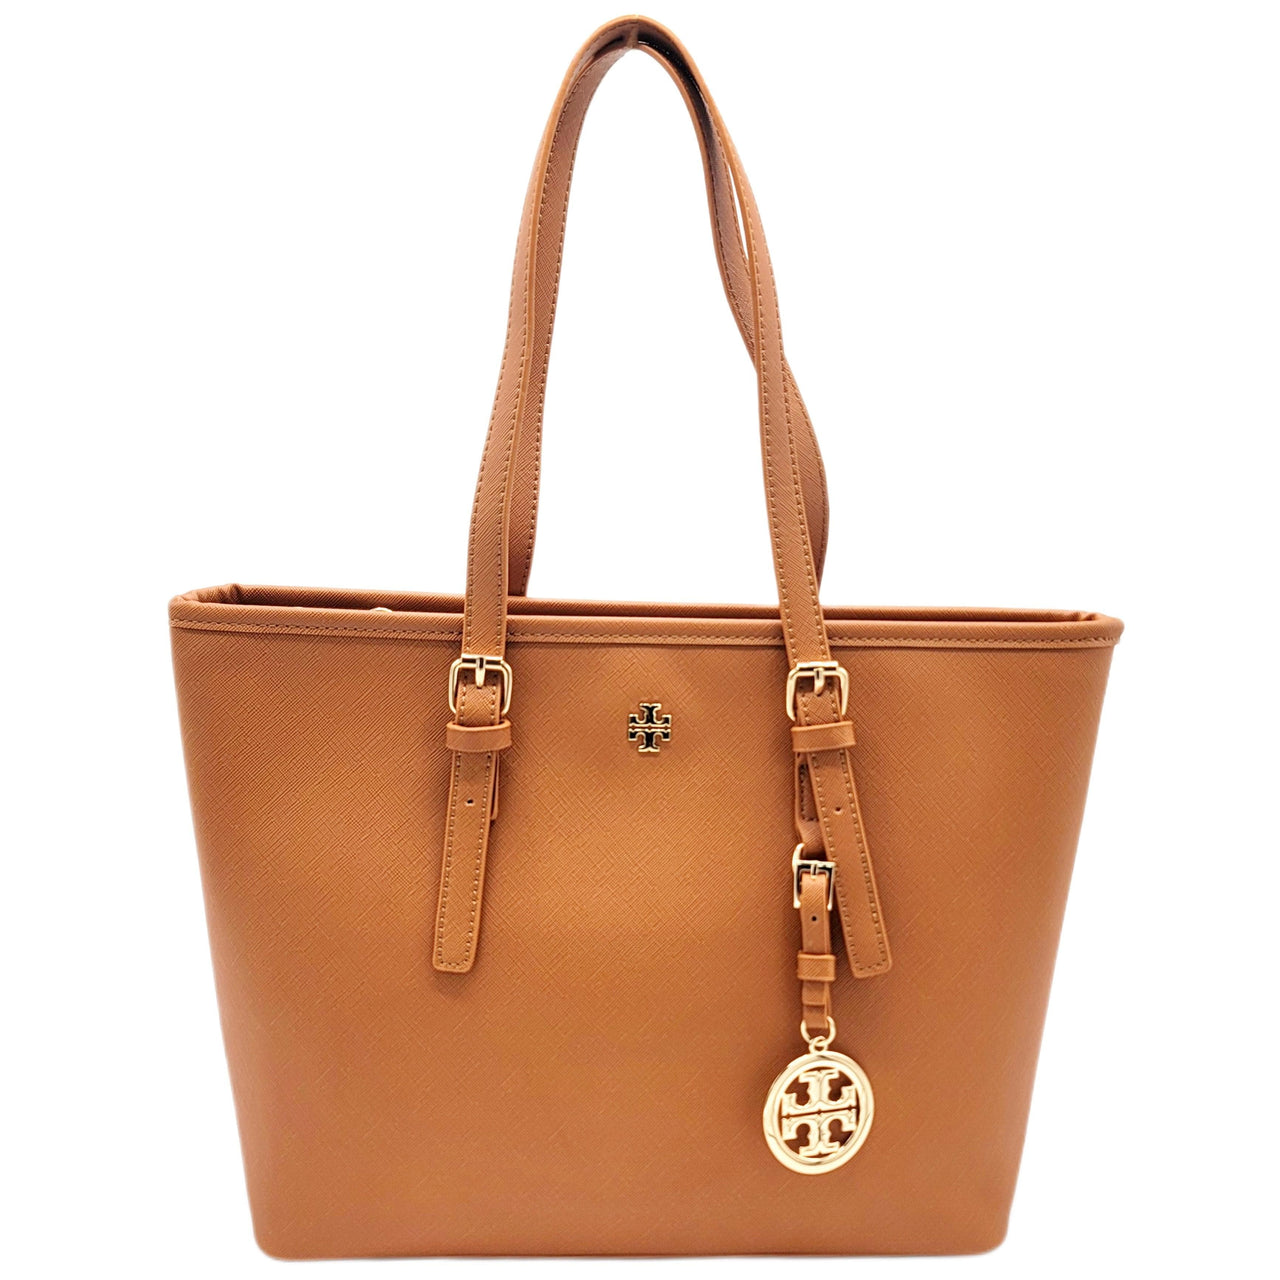 The Bag Couture Handbags, Wallets & Cases Tory Burch Shoulder Bag Camel